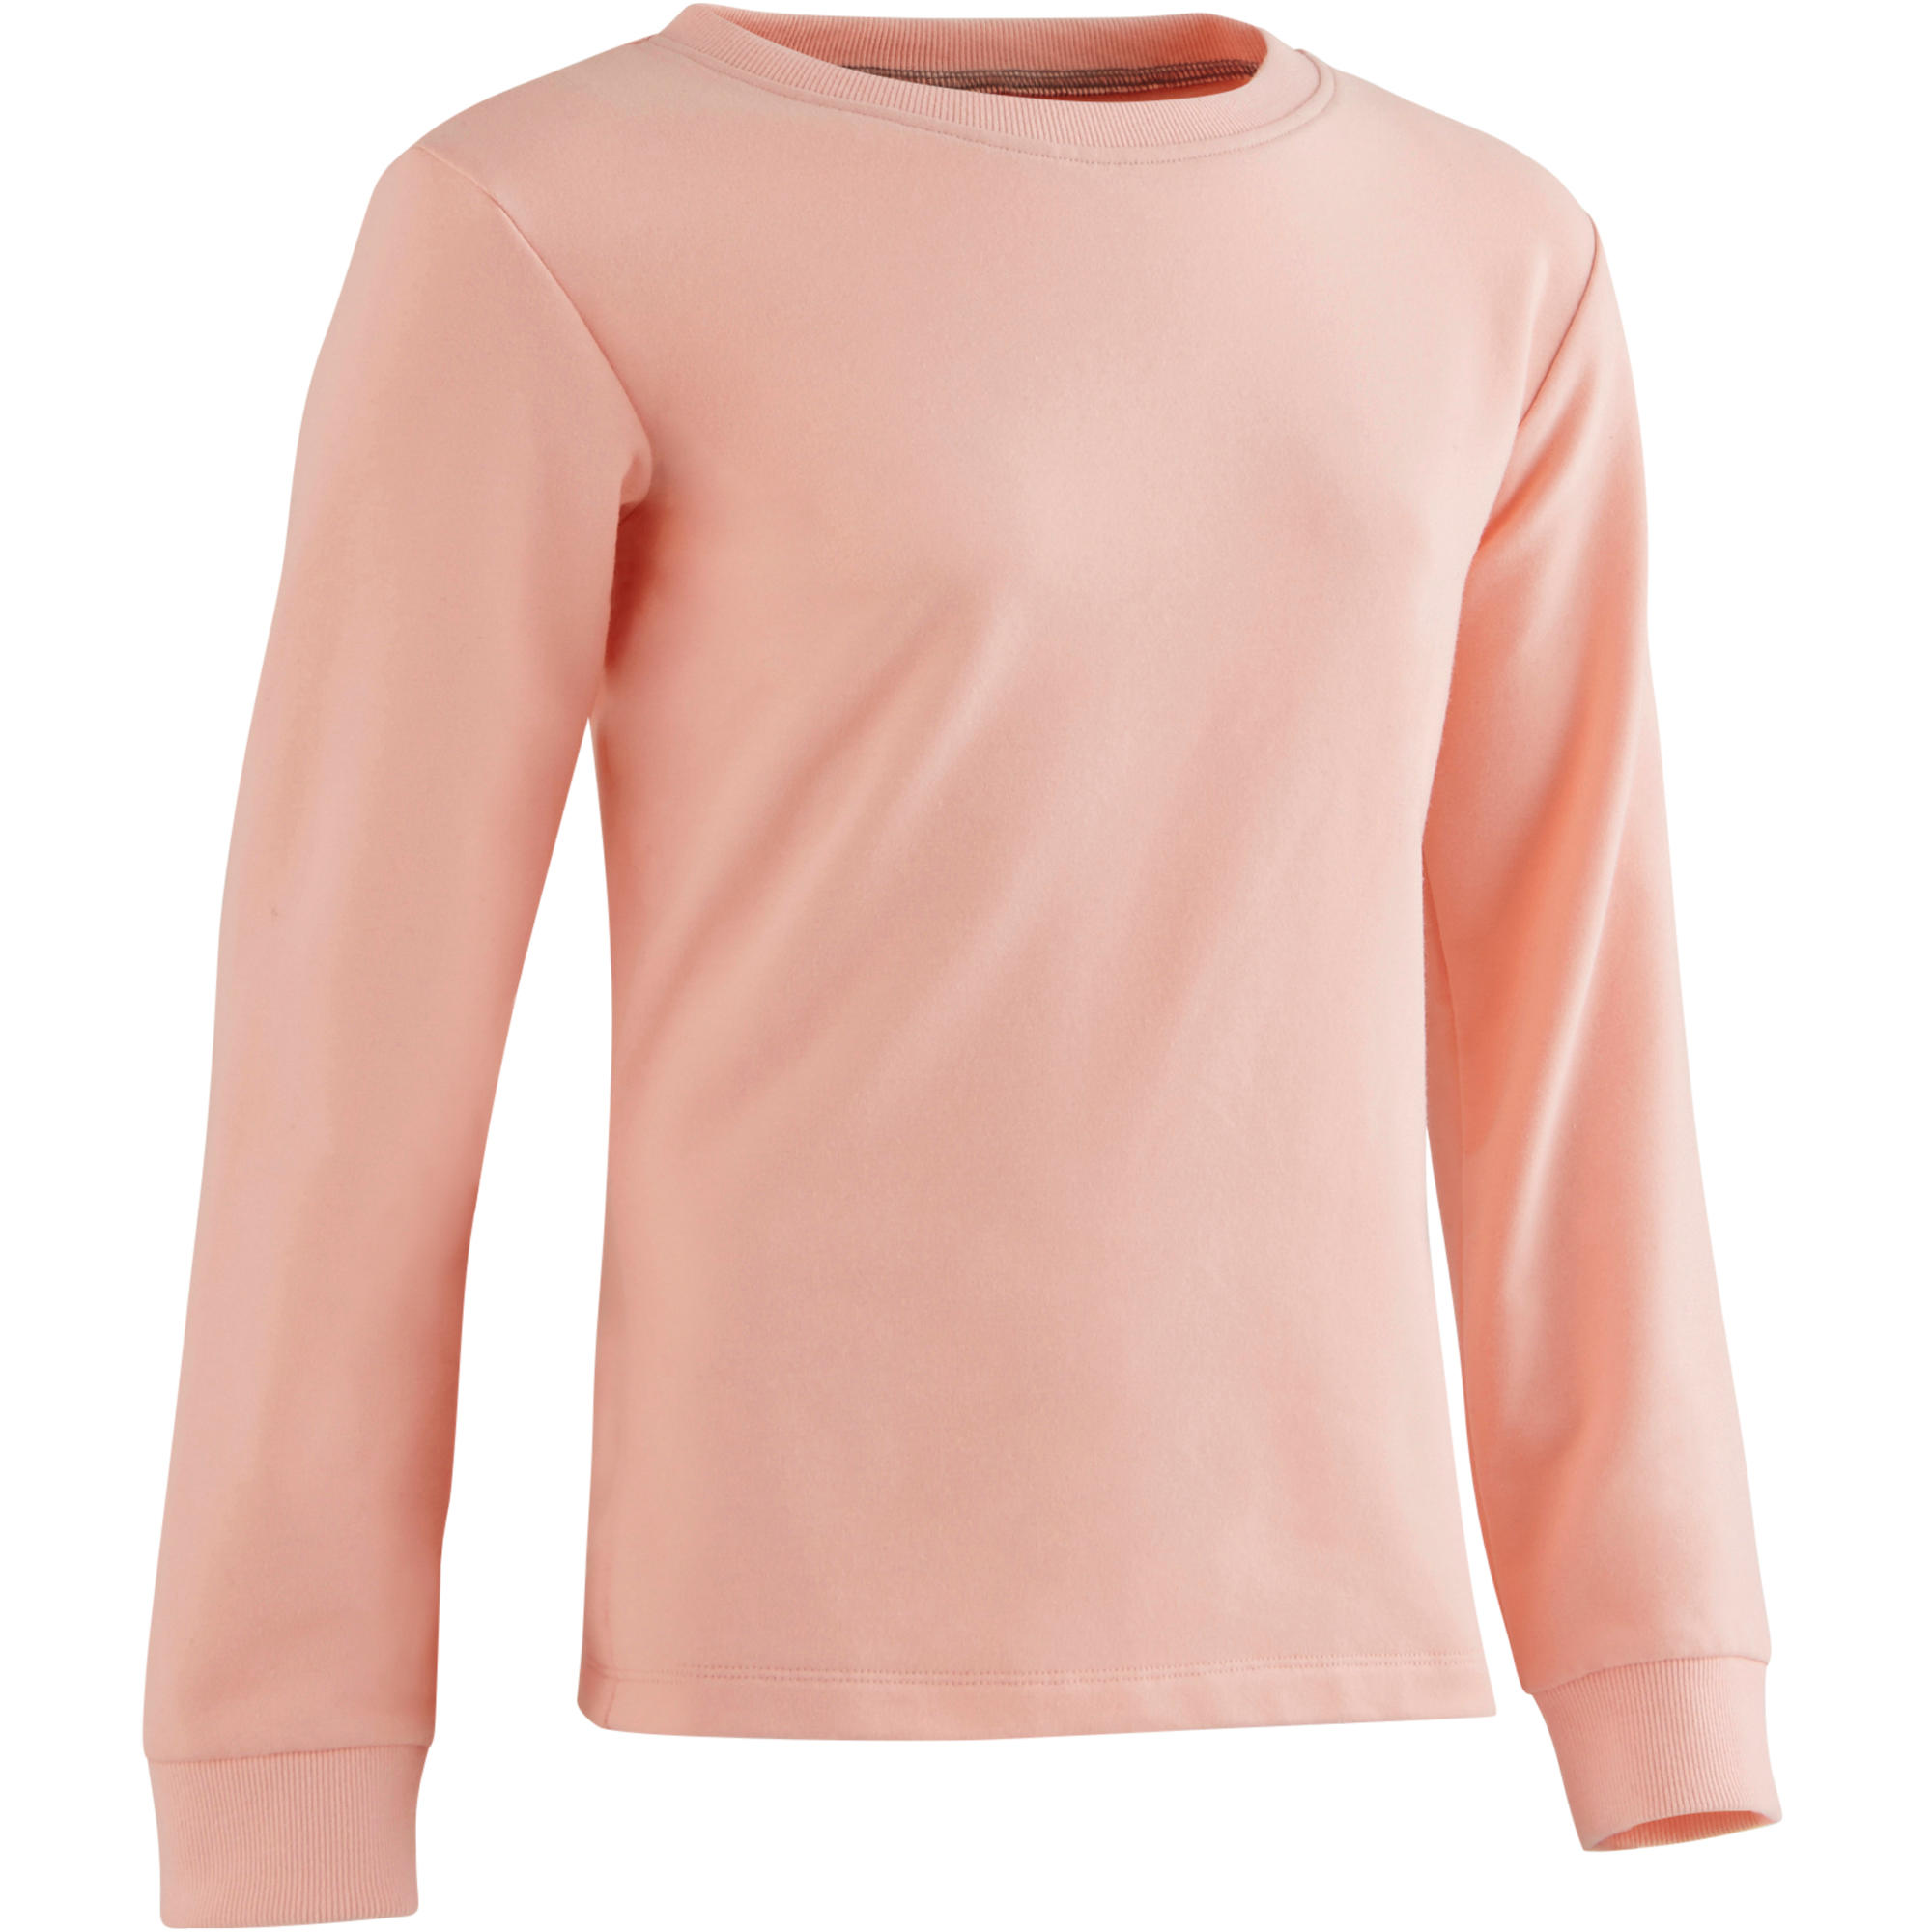 DOMYOS 100 Girls' Gym Sweatshirt - Pink